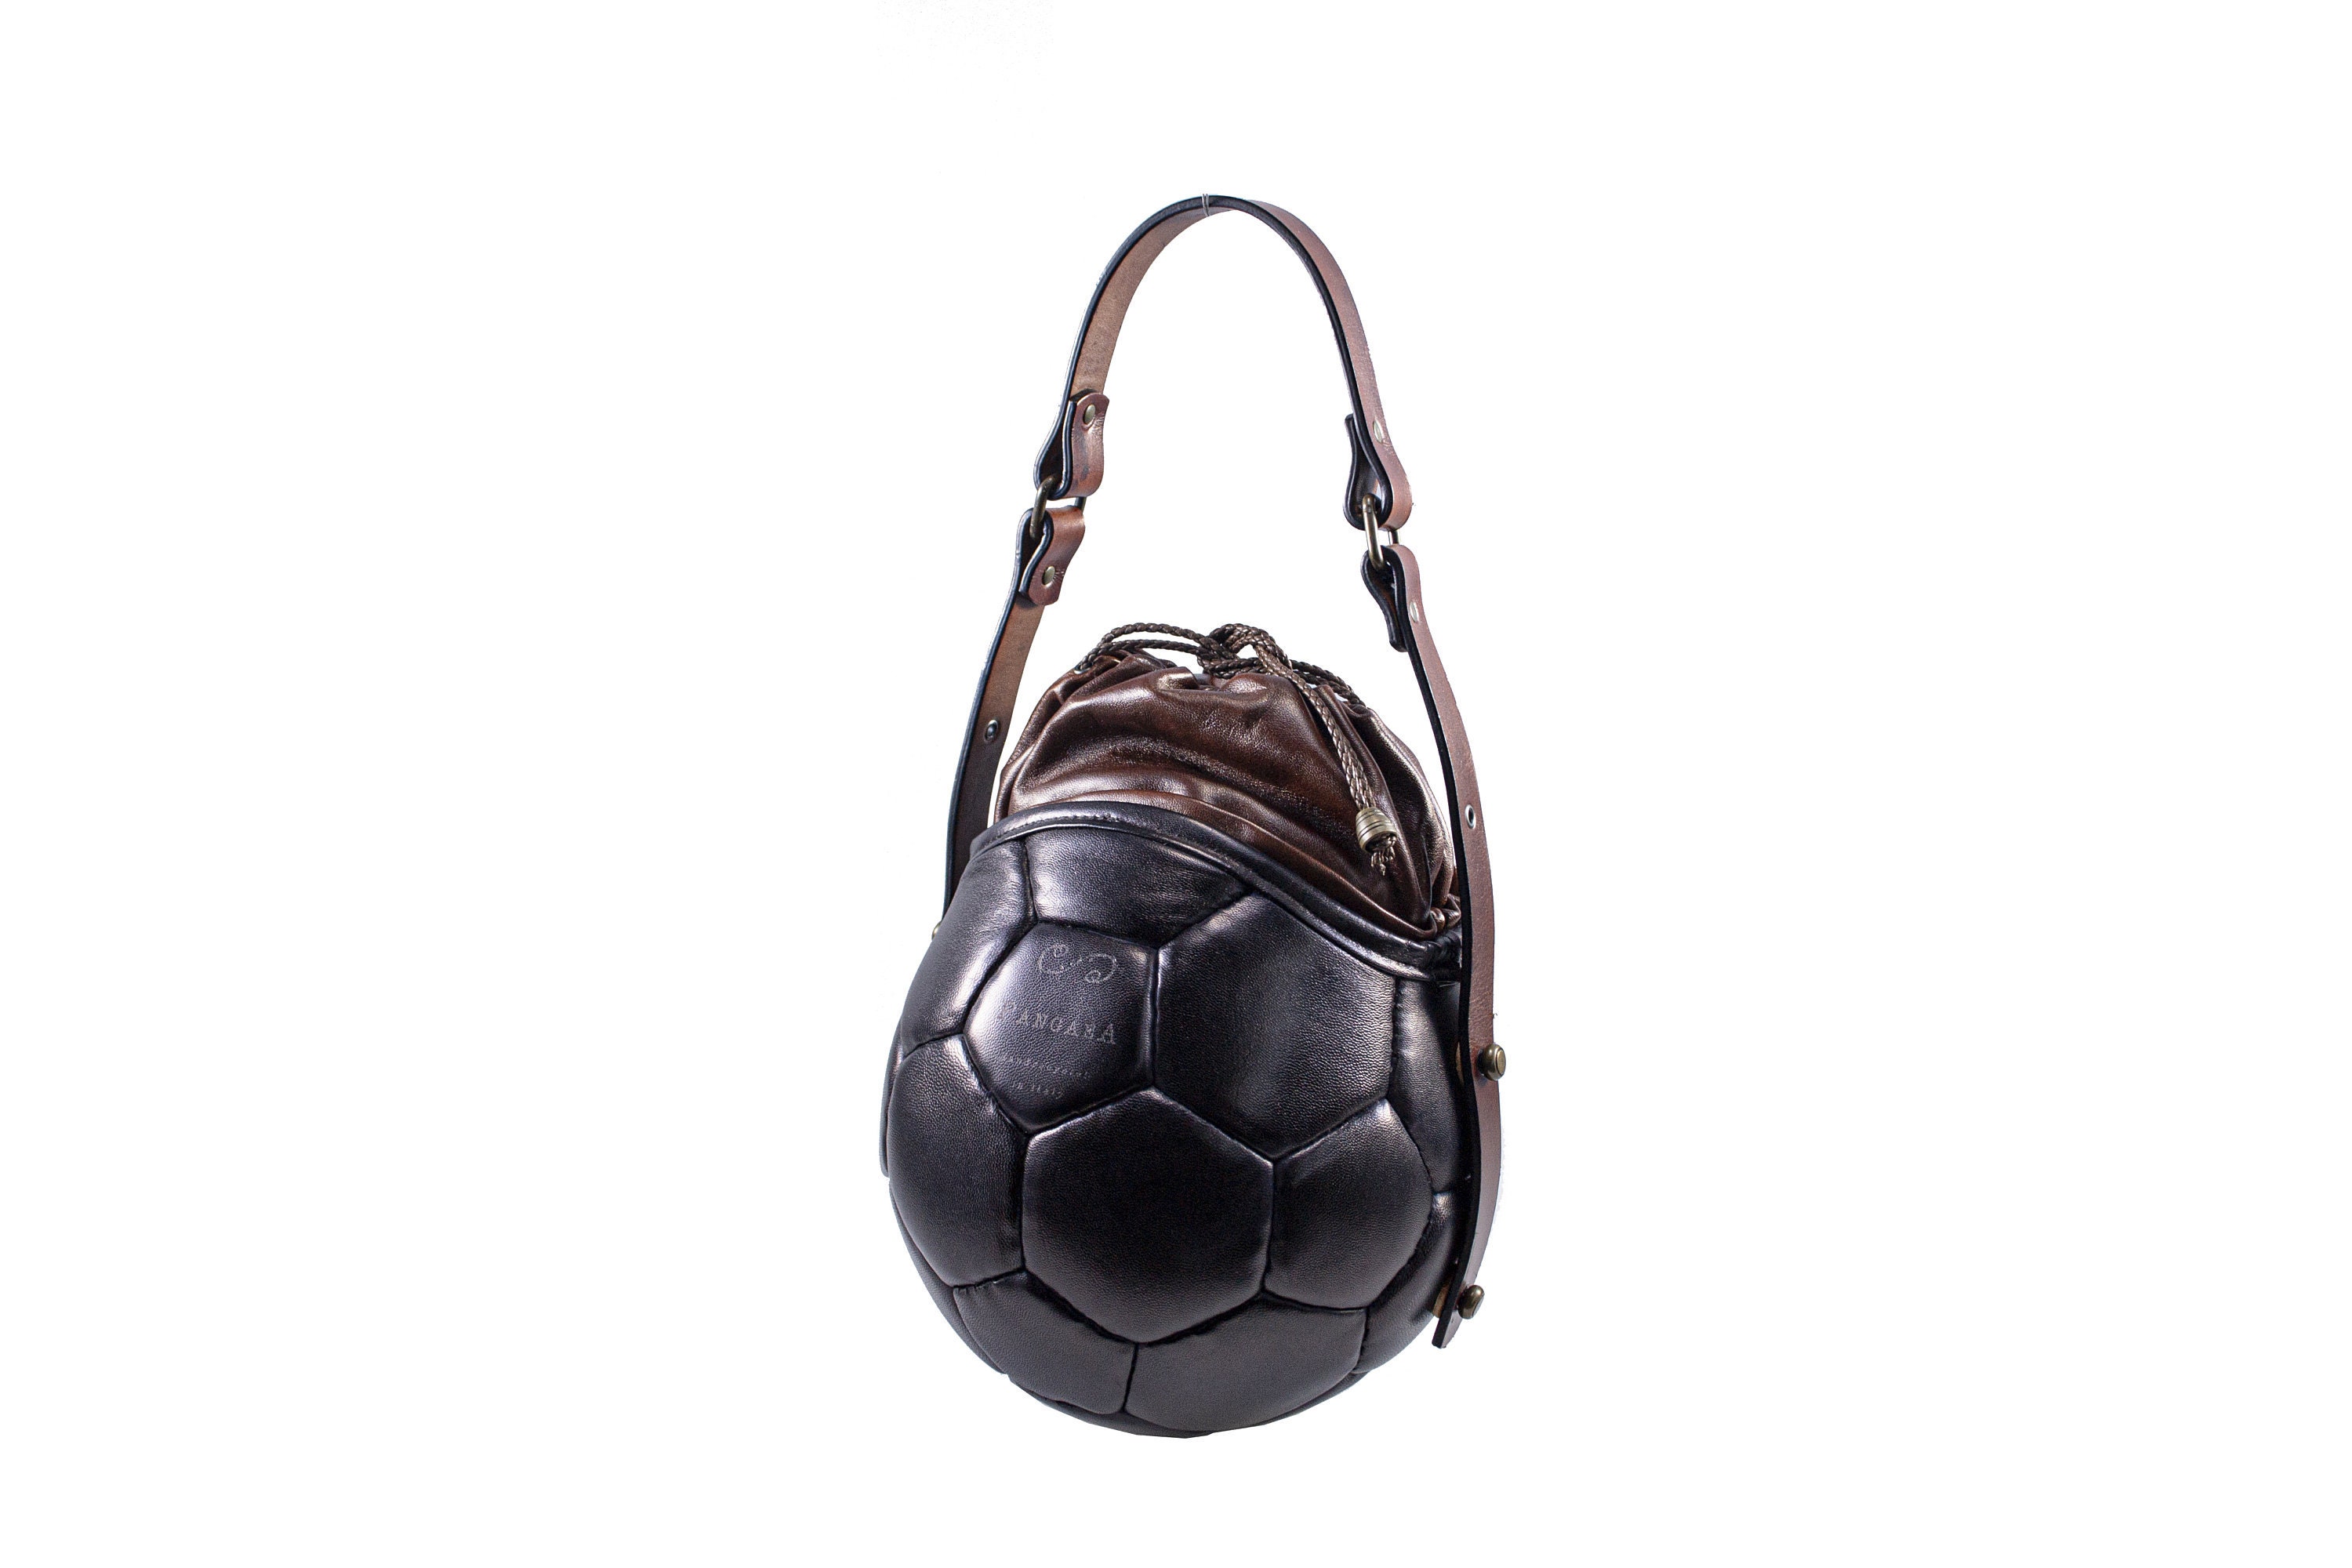 Holographic Ball Bag Frame Satchel | Shoes for less, Closure bag, Online  bags